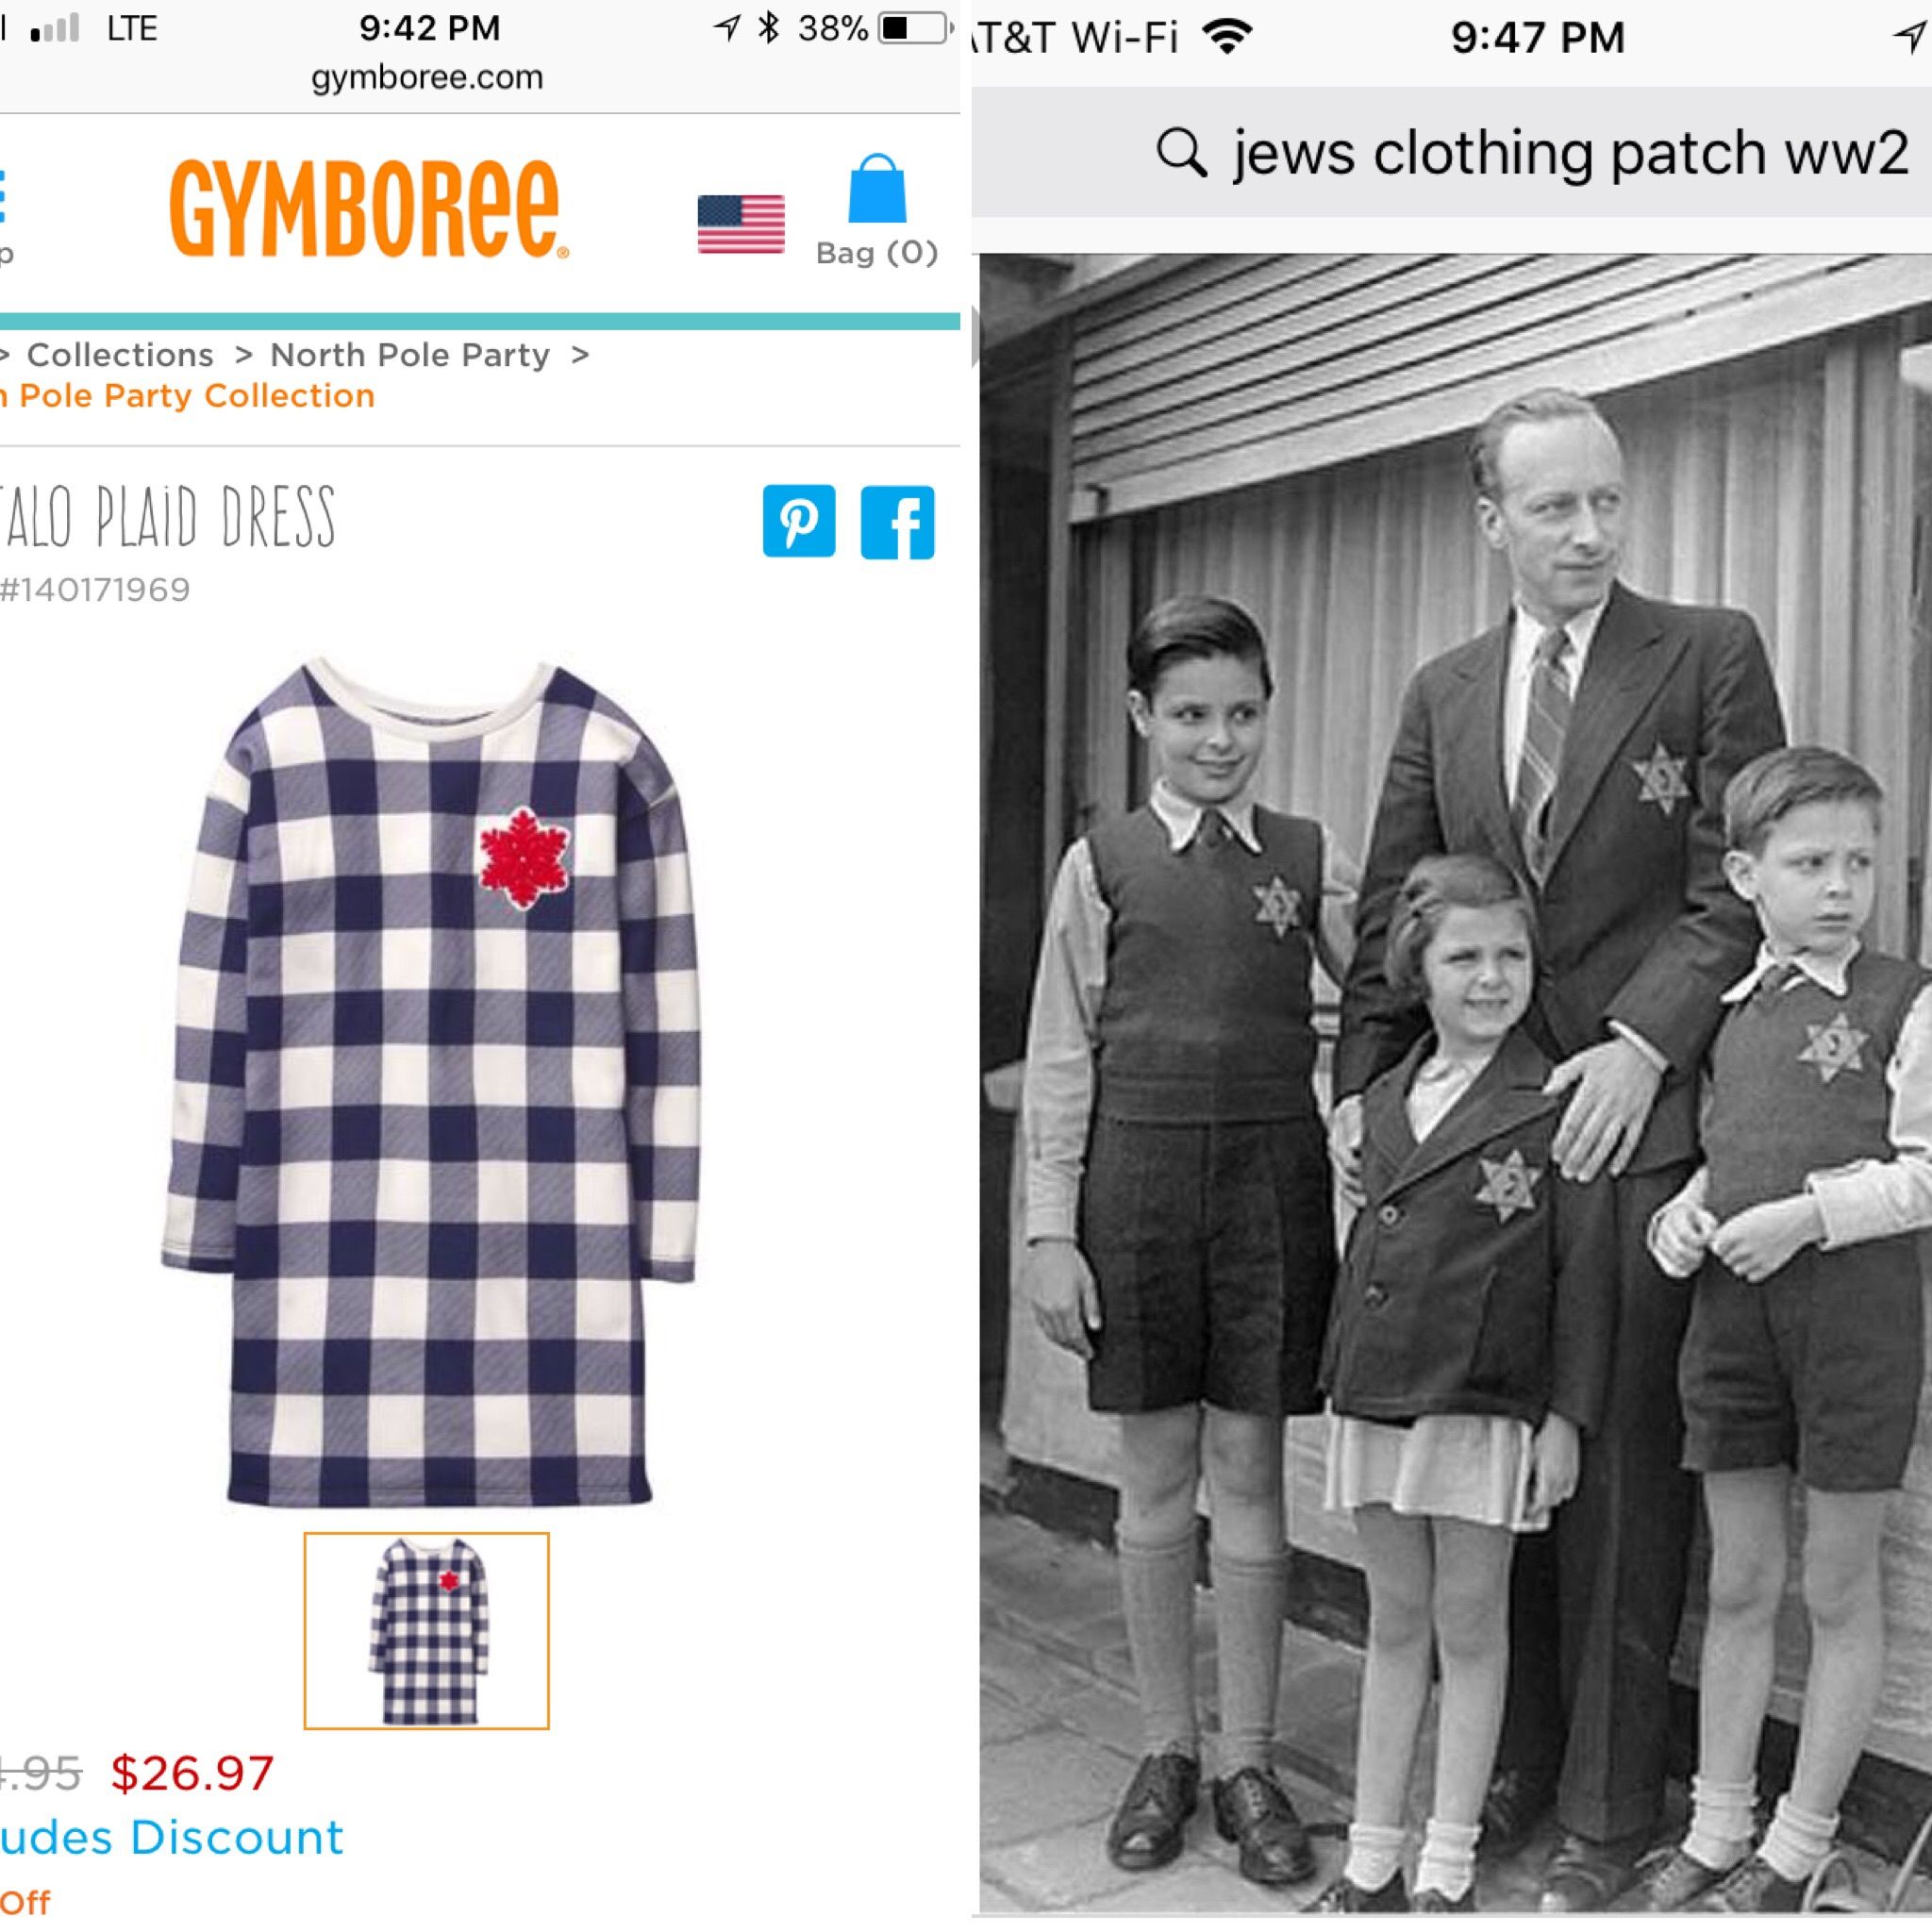 Holocaust-Era 'Jewish Star' Toddler Dress Sold at Gymboree Sparks